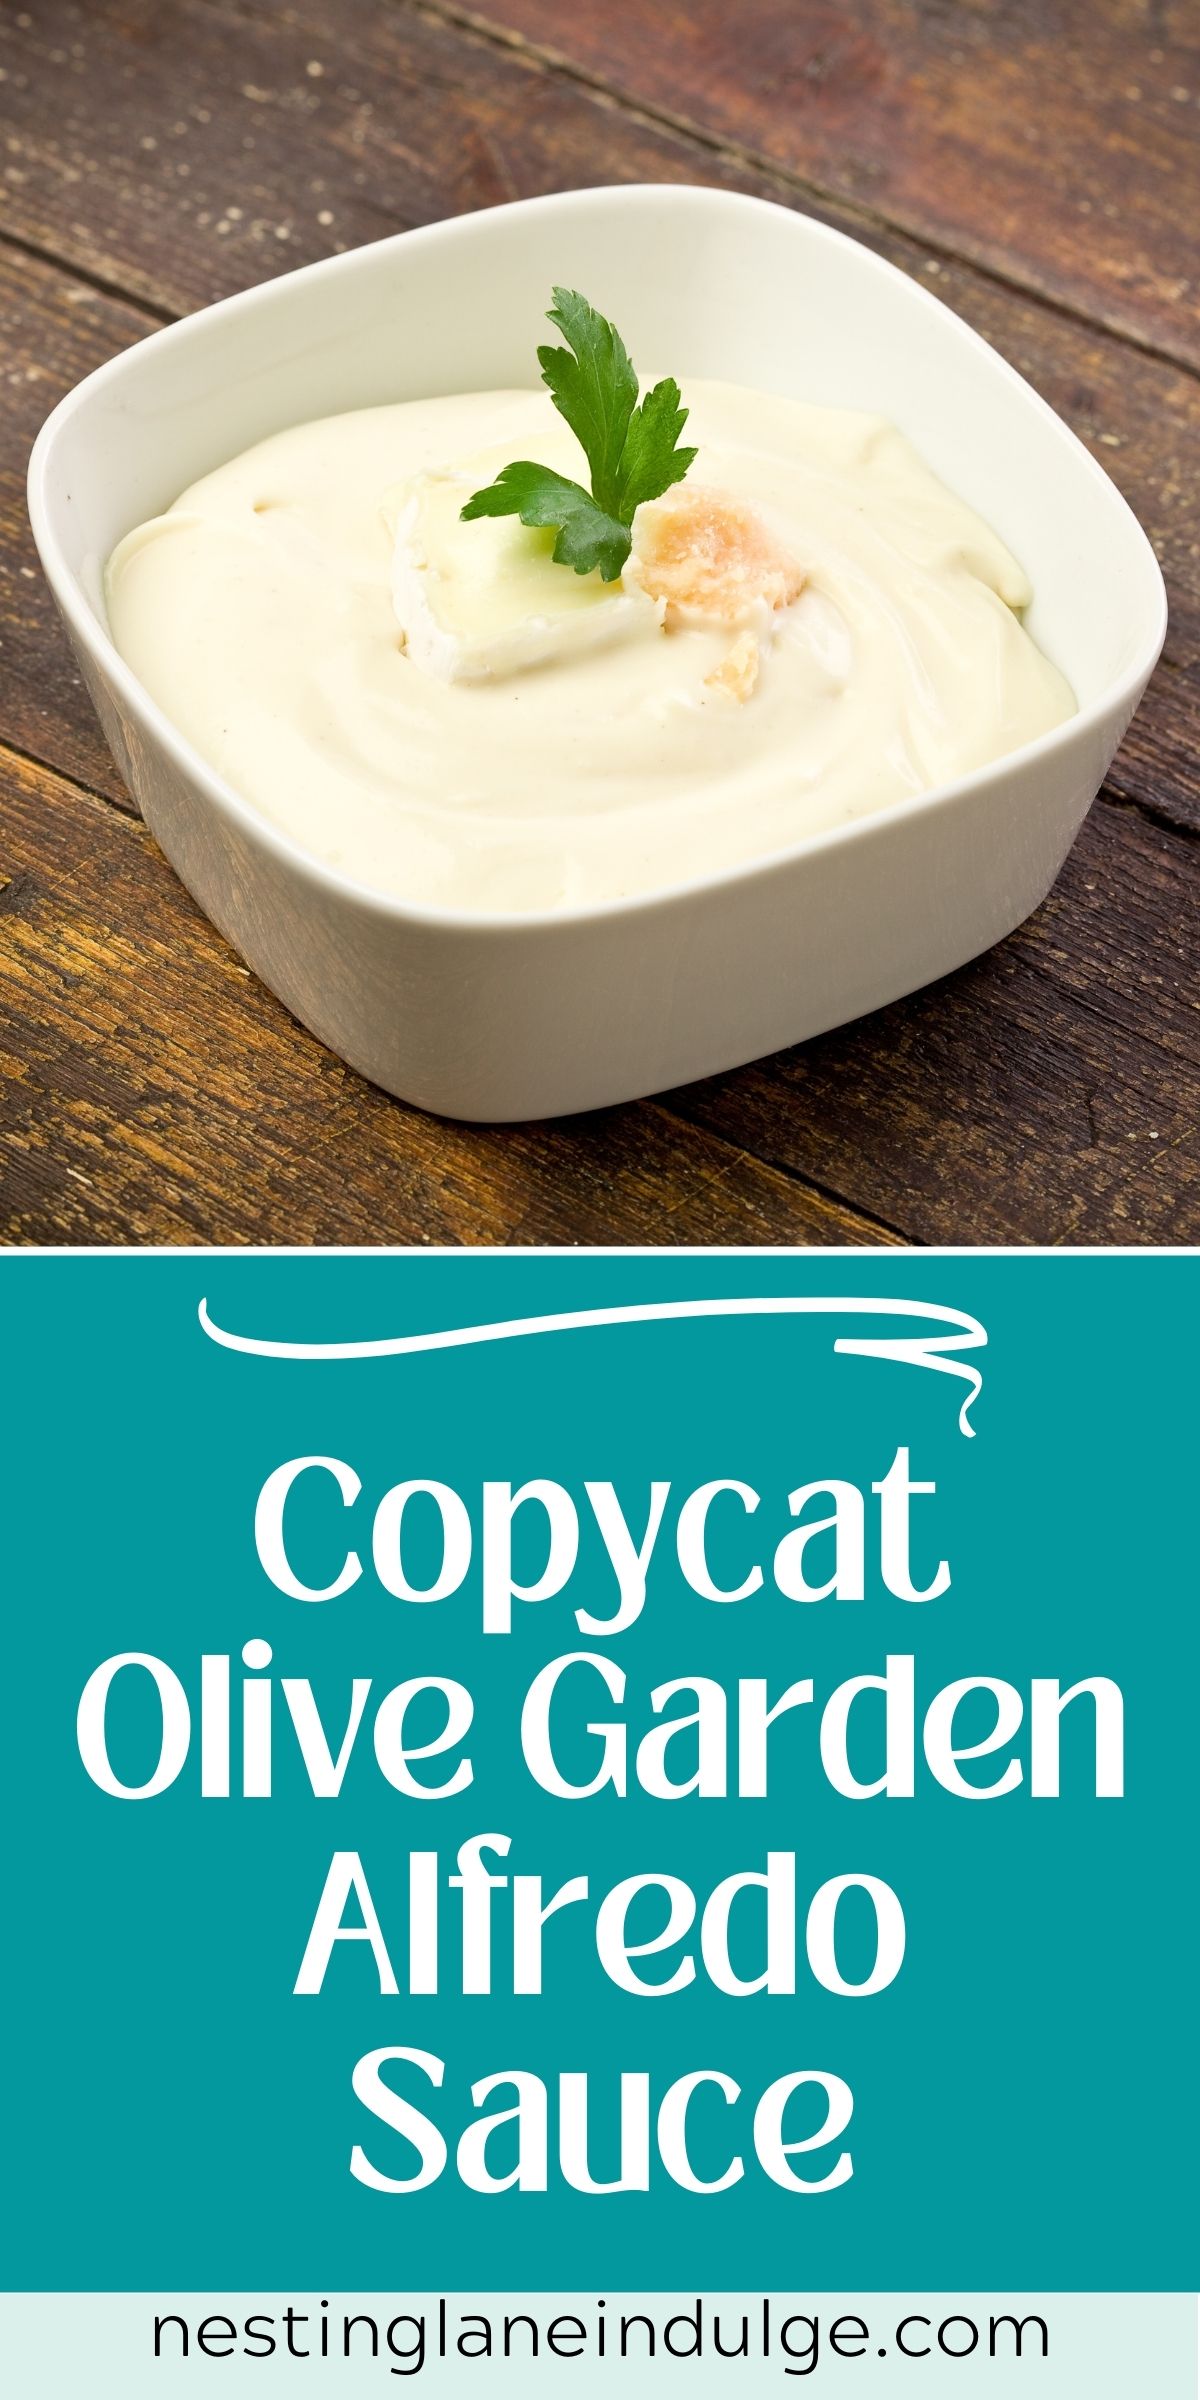 Graphic for Pinterest of Copycat Olive Garden Alfredo Sauce Recipe.